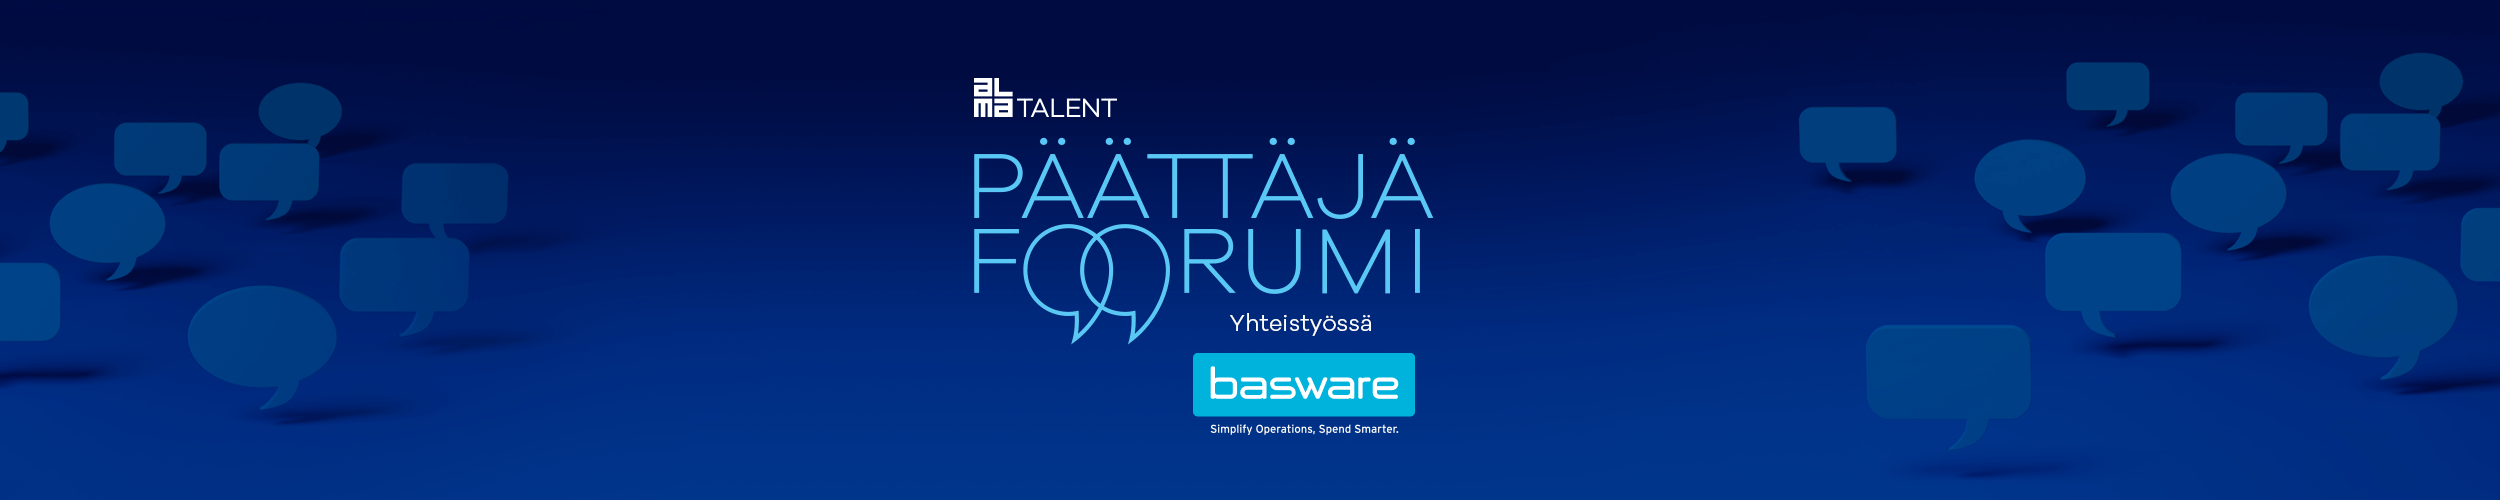 at-paattaja-forum-basware_2500x500.png (132 KB)